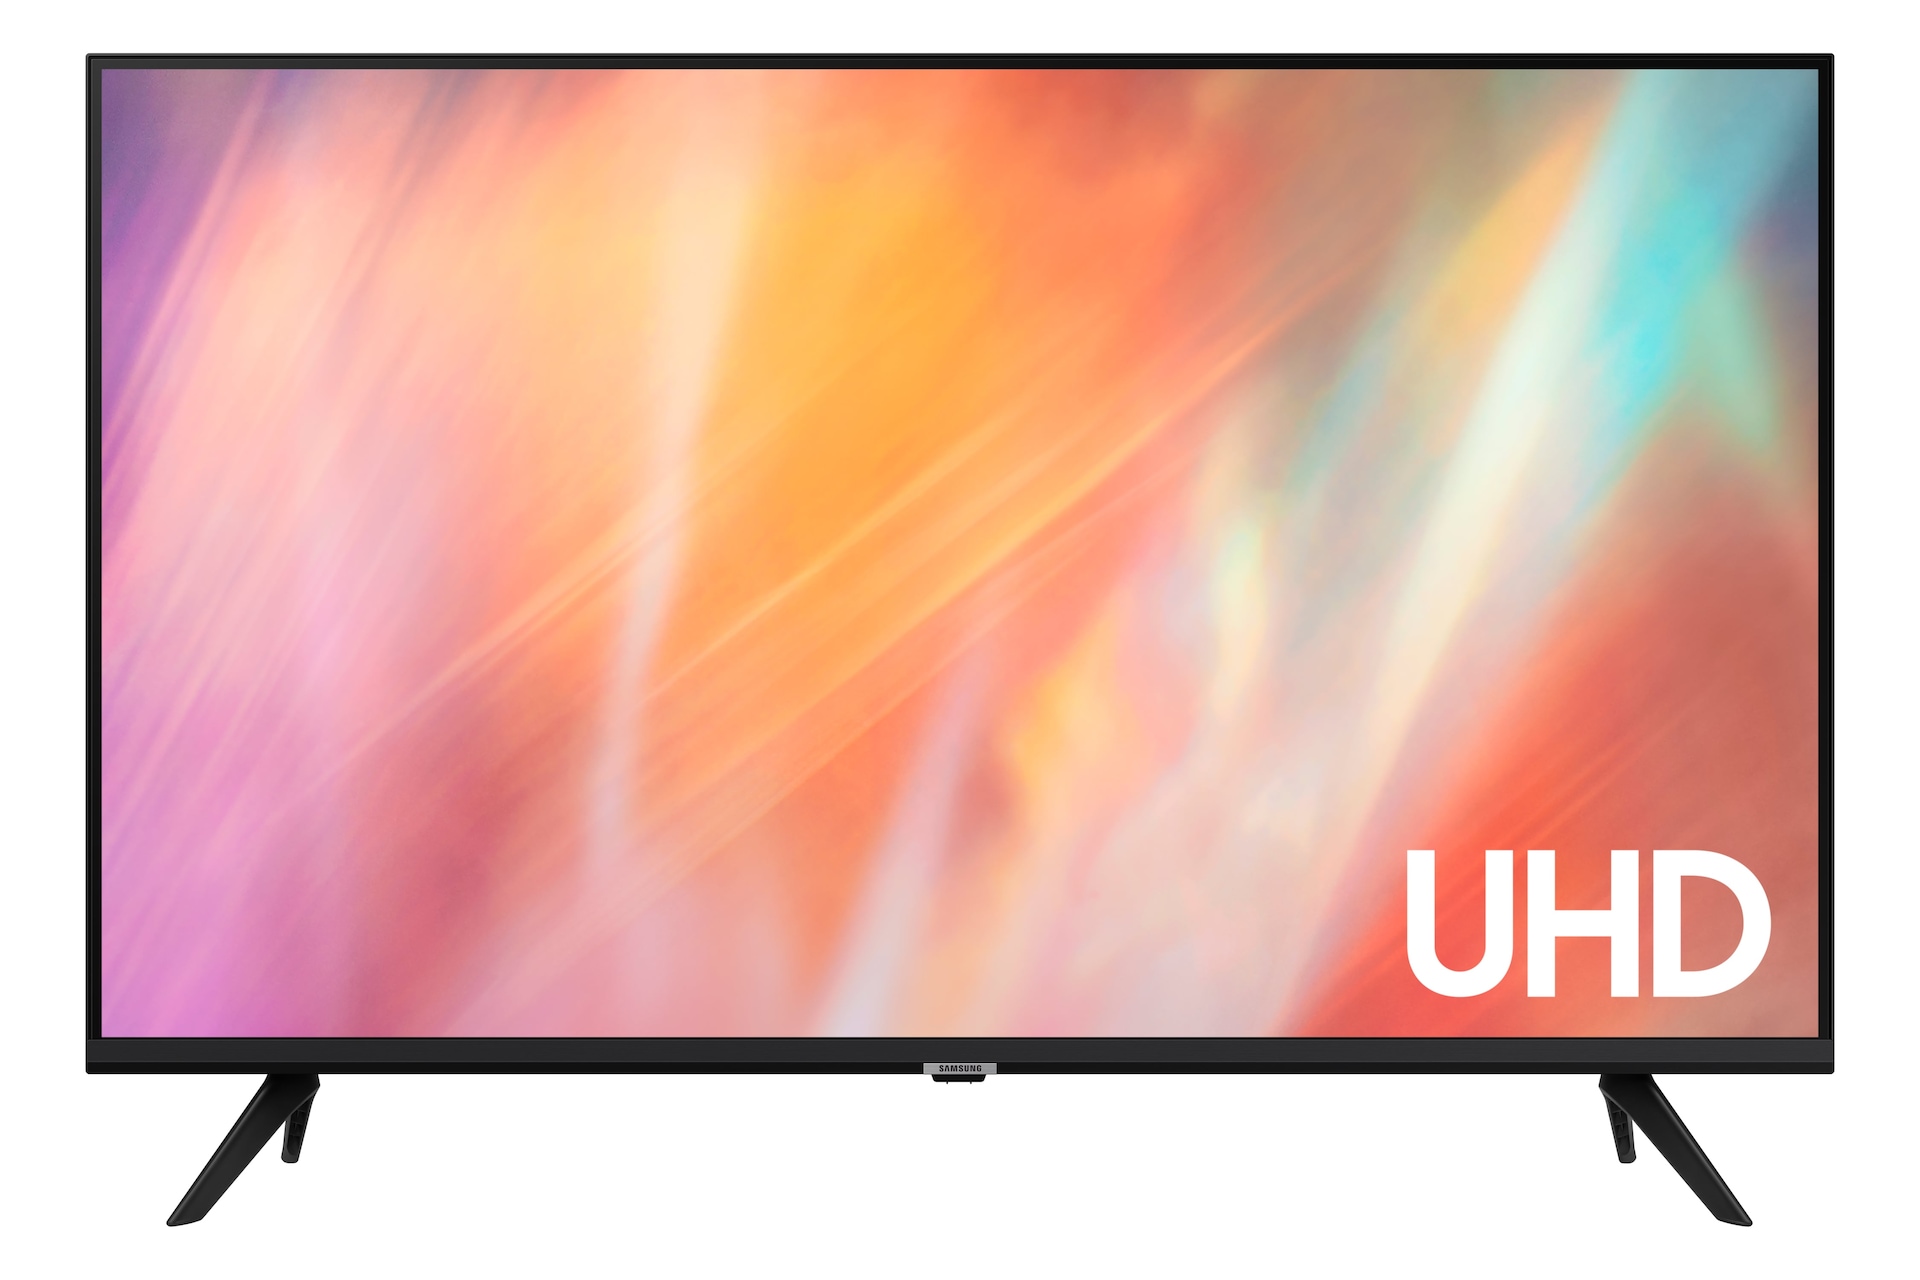 Samsung TV 43 AU7090 UHD 4K Smart TV 2021, Q Symphony, 20W